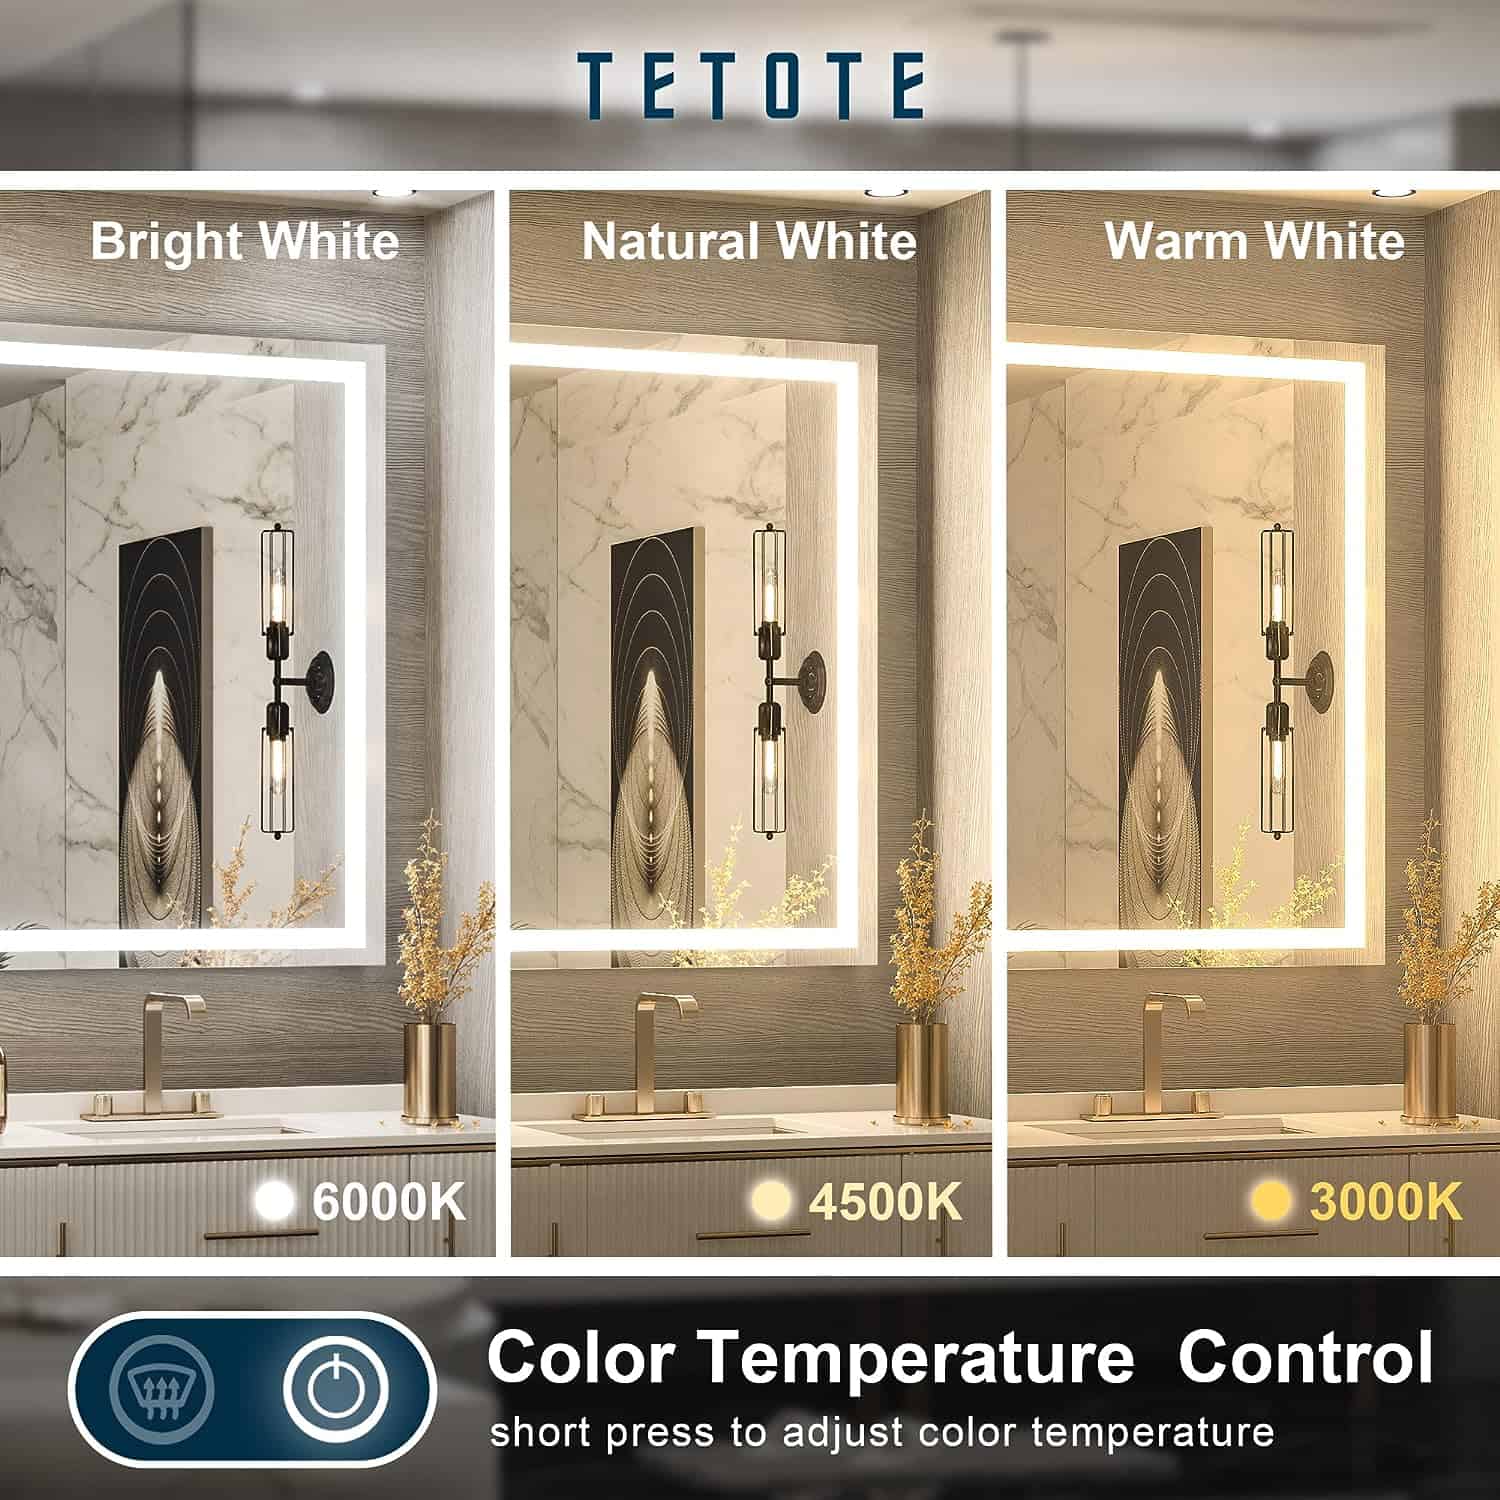 TETOTE LED Bathroom Mirror 40 x 24 Bathroom Vanity Mirror White Warm Natural Lighted Mirror Dimmable CRI90 IP54 Waterproof Wall Mounted Illuminated Mirror Horizontal Vertical 3